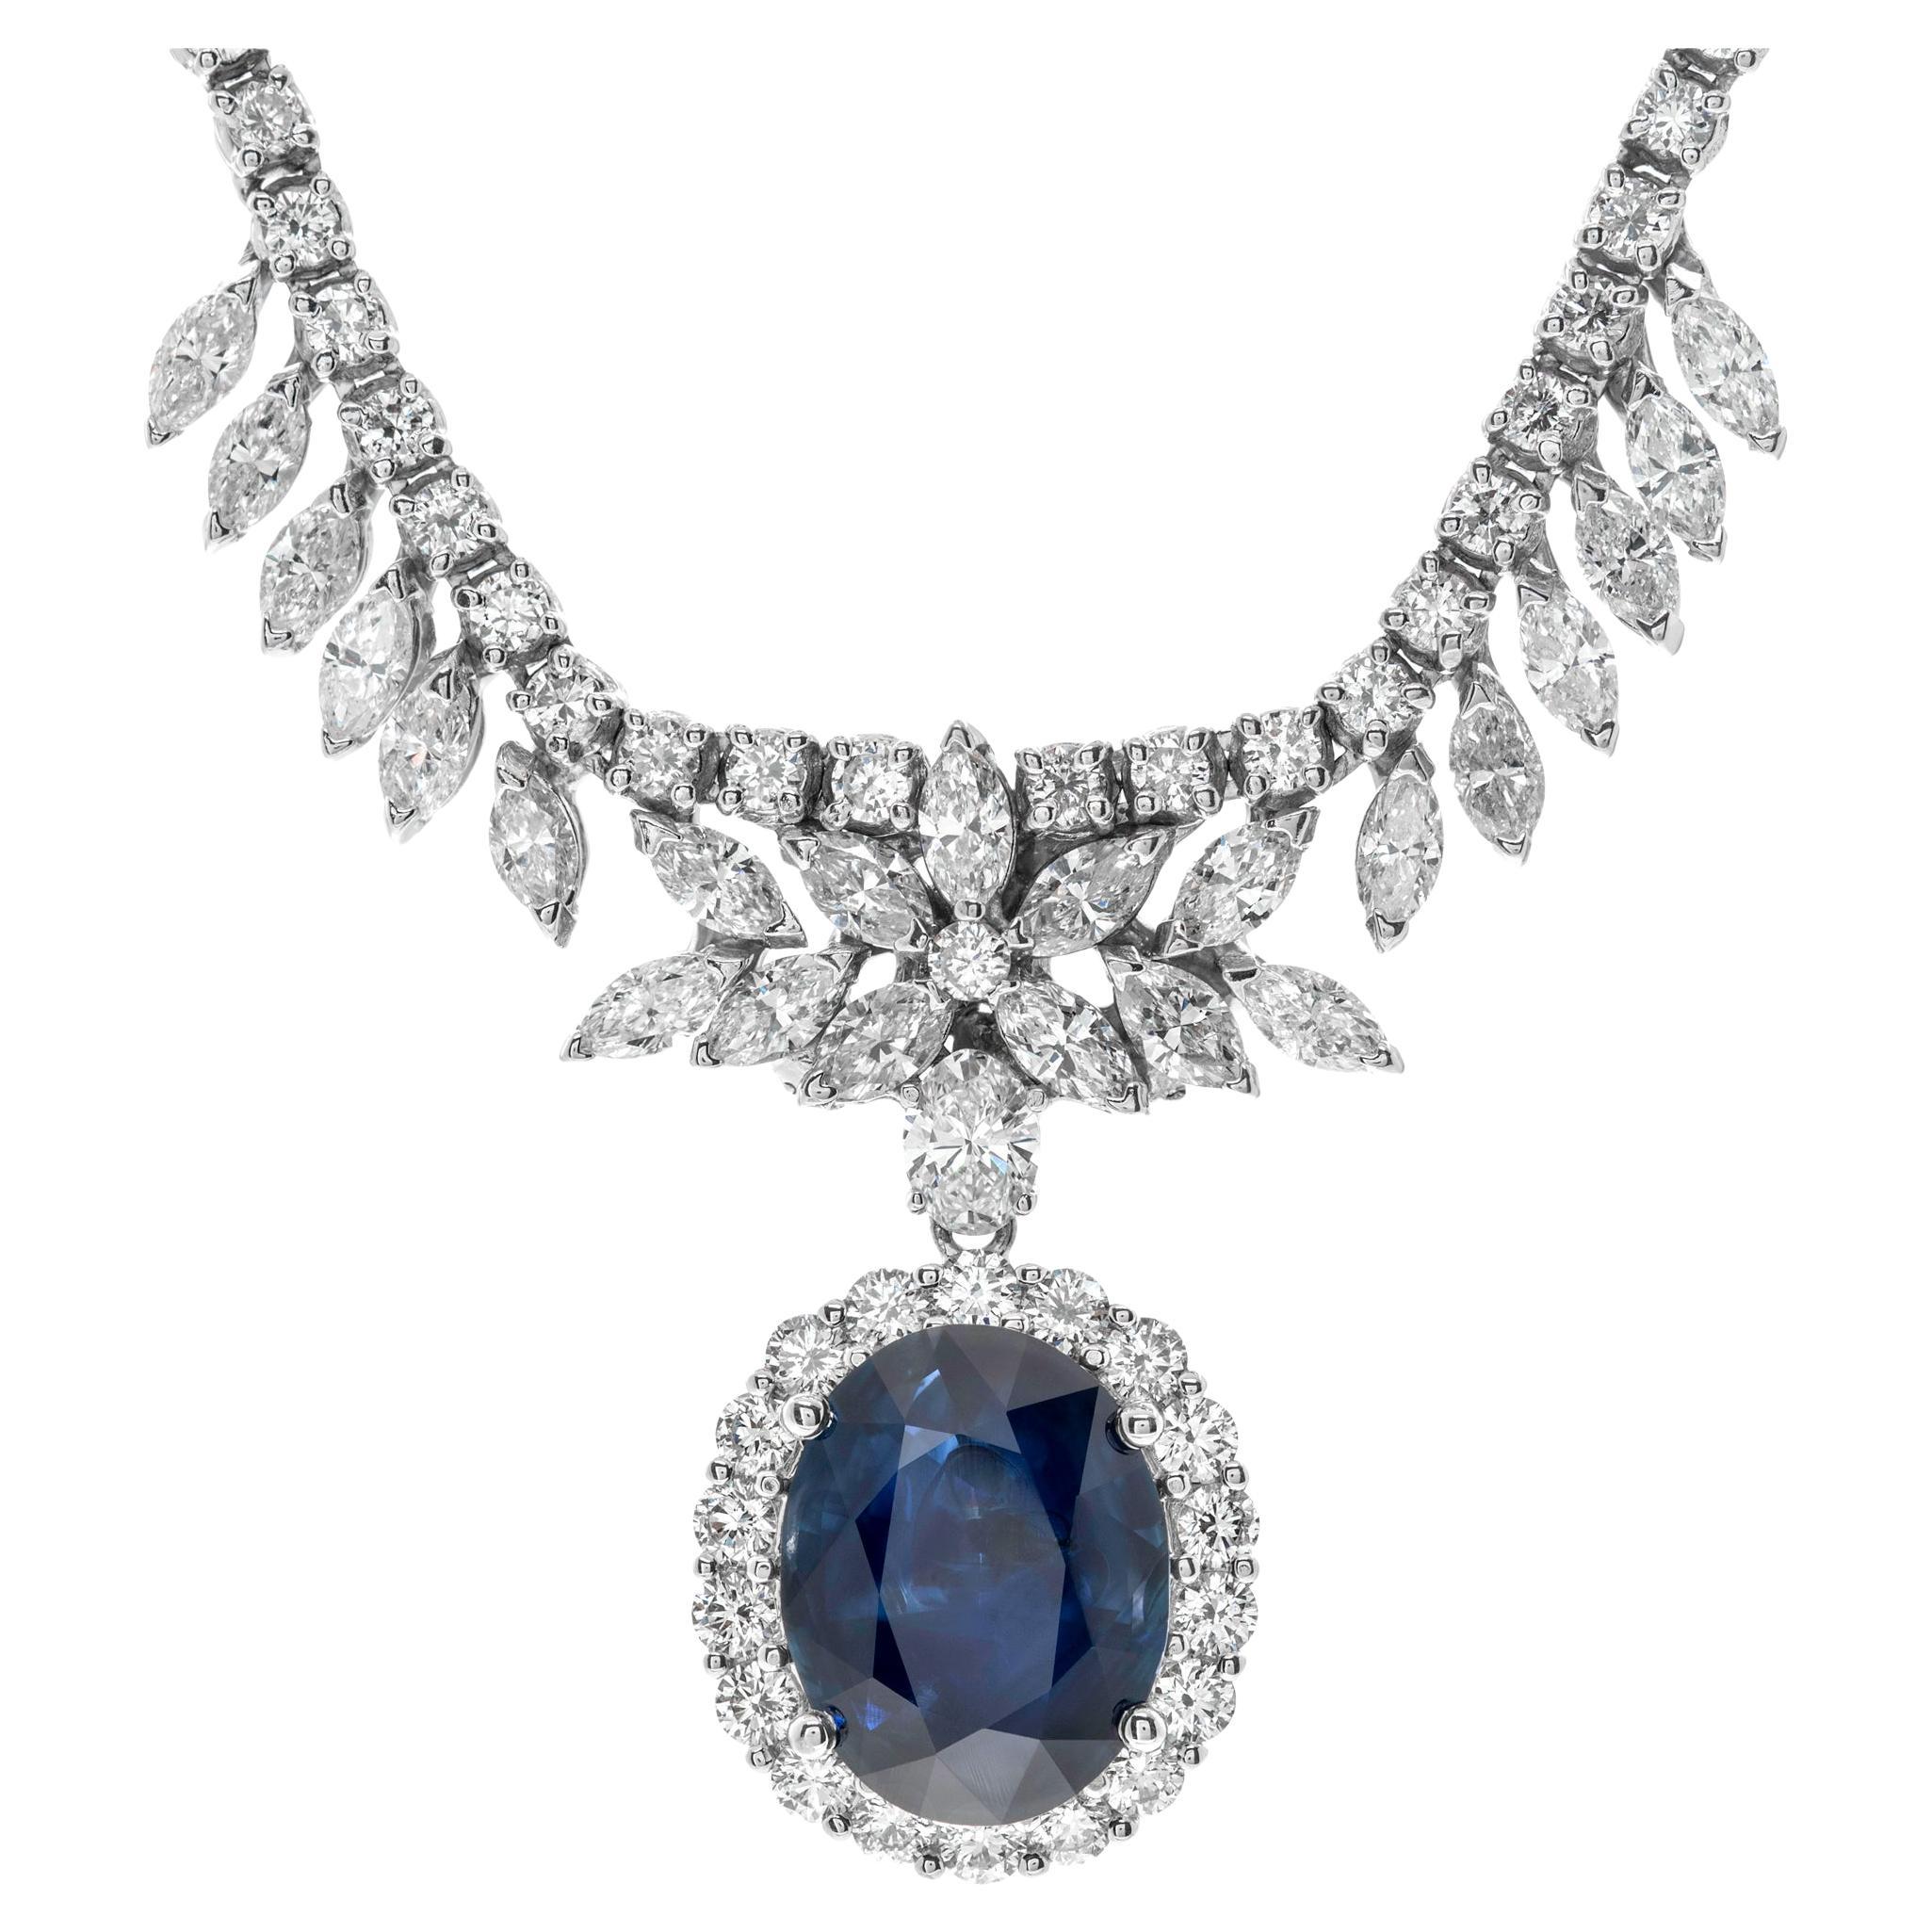 Collier en or blanc avec diamants ronds taille ovale marquise et saphirs bleus taille ovale